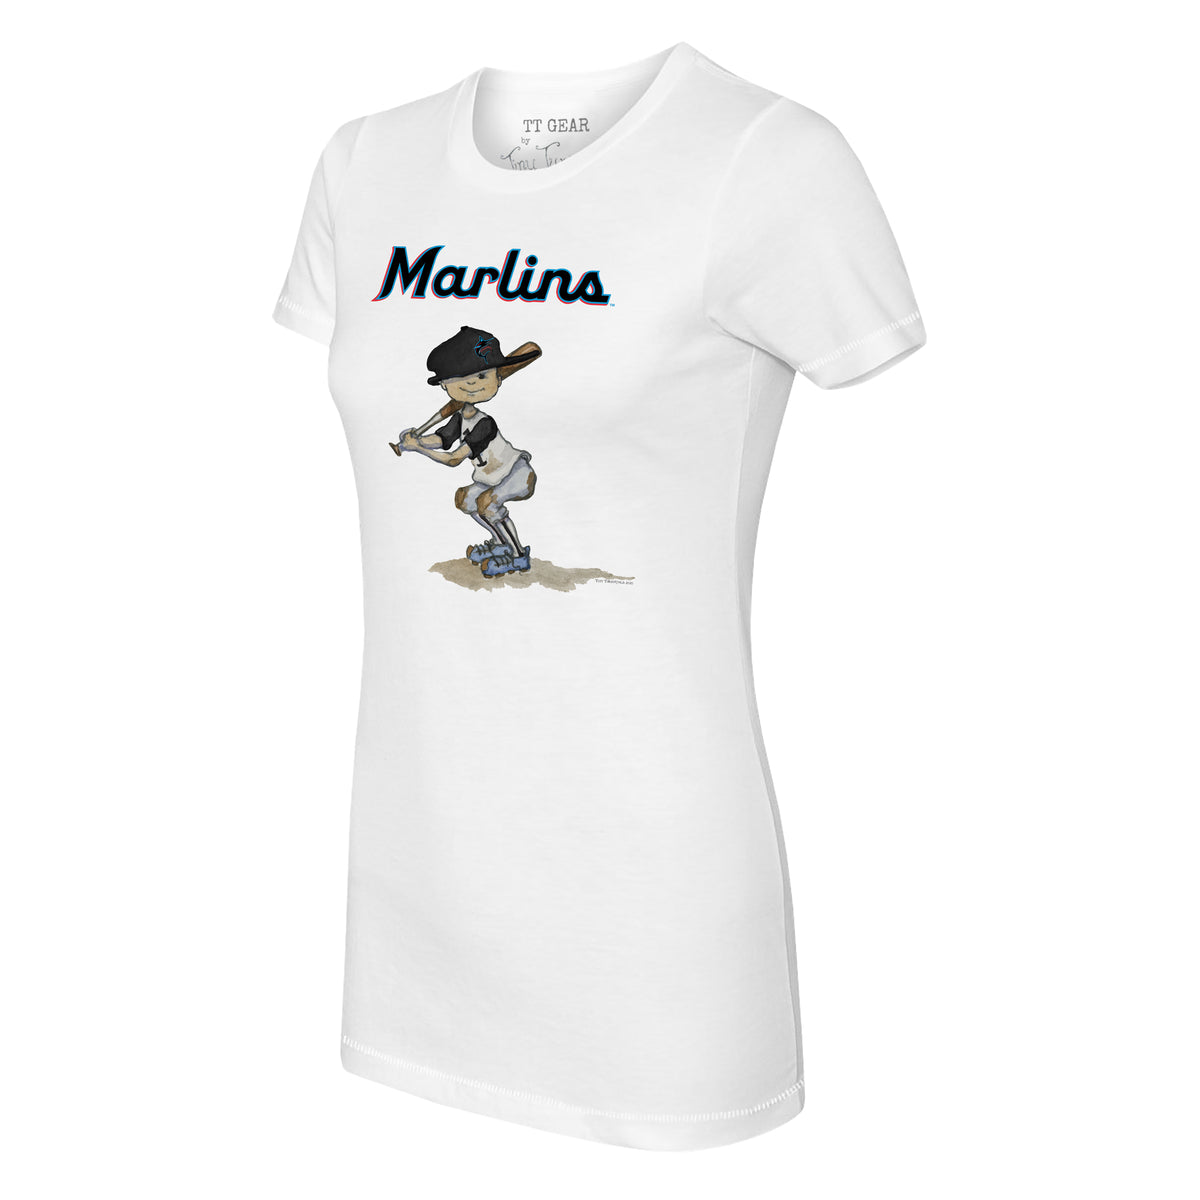 Tiny Turnip Miami Marlins Babes Tee Shirt Women's XS / White